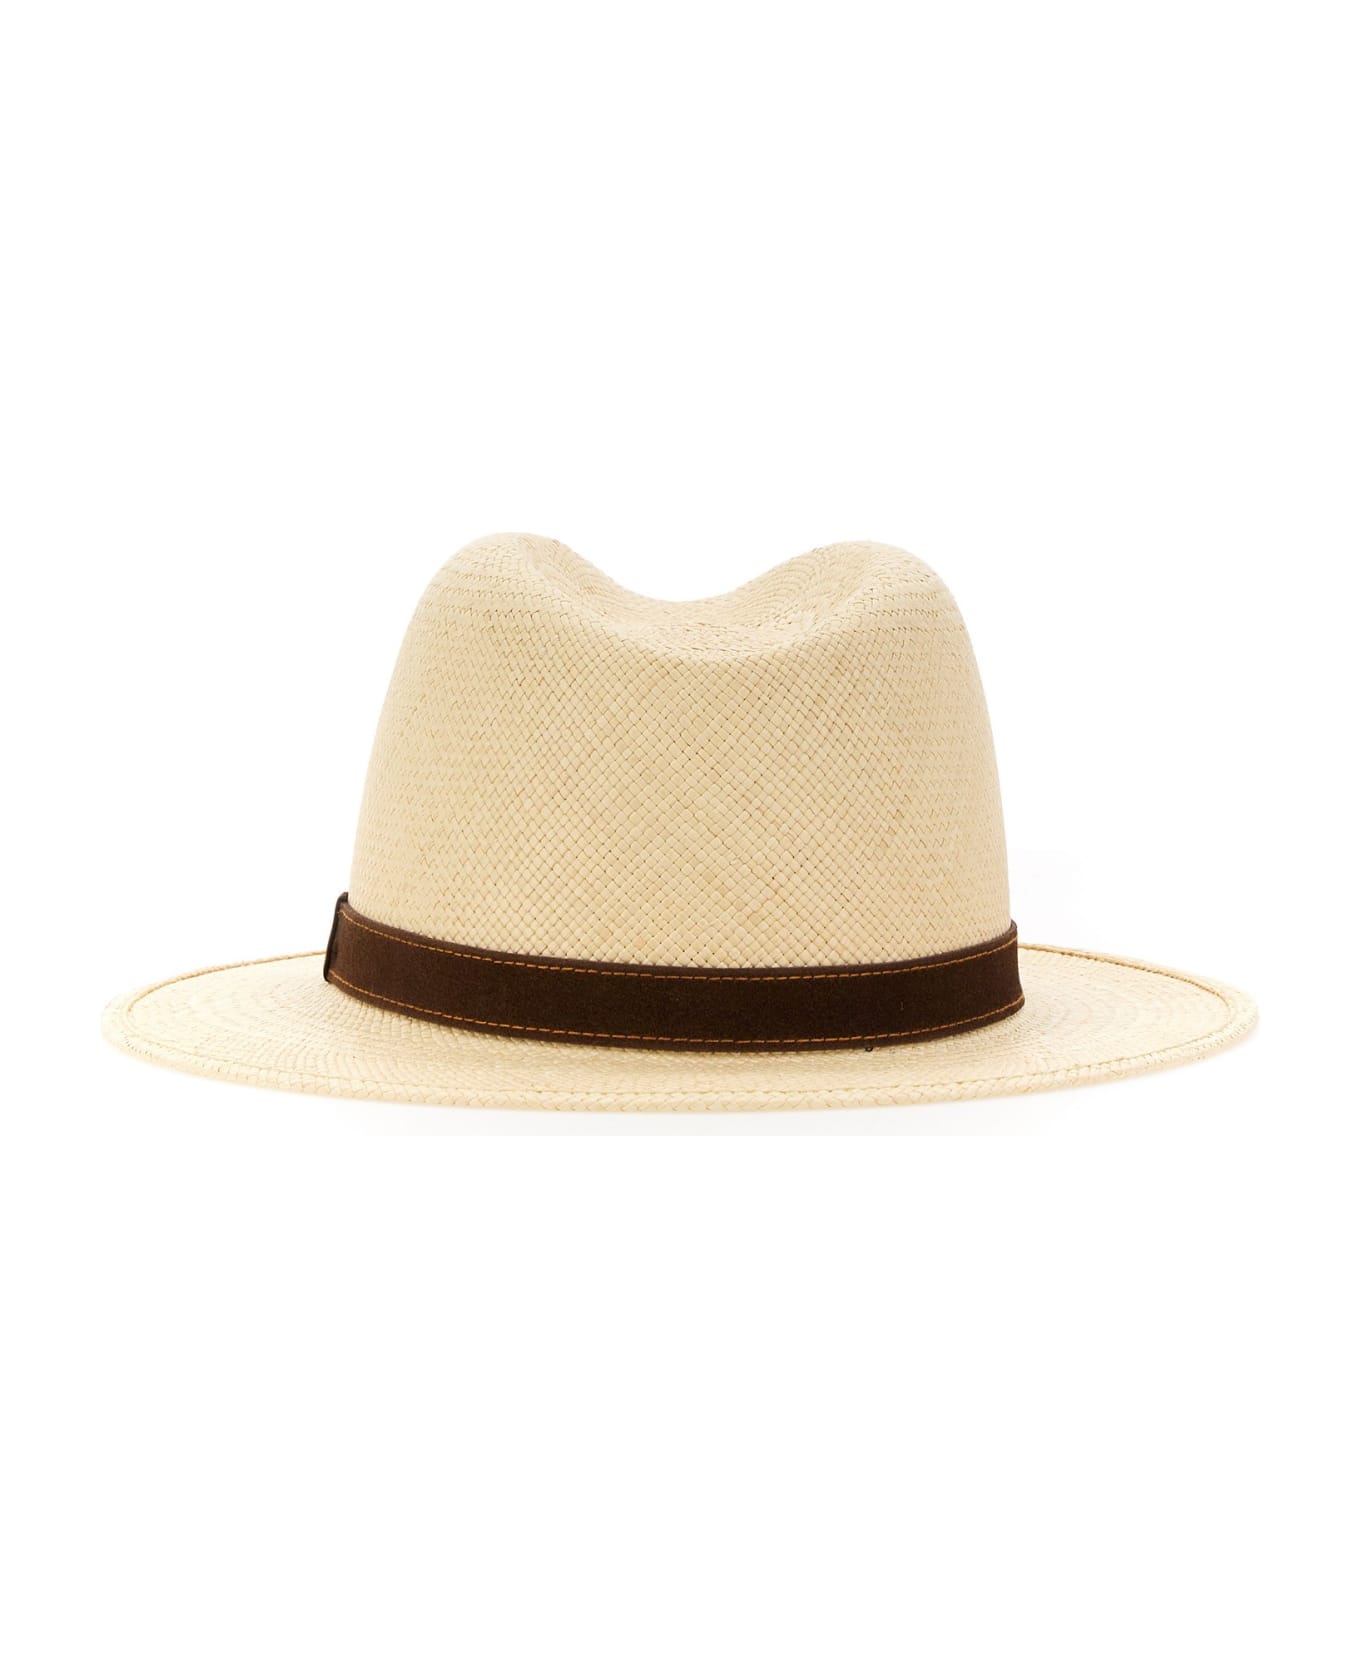 Borsalino Country Panama Quito Hat - Brown 帽子